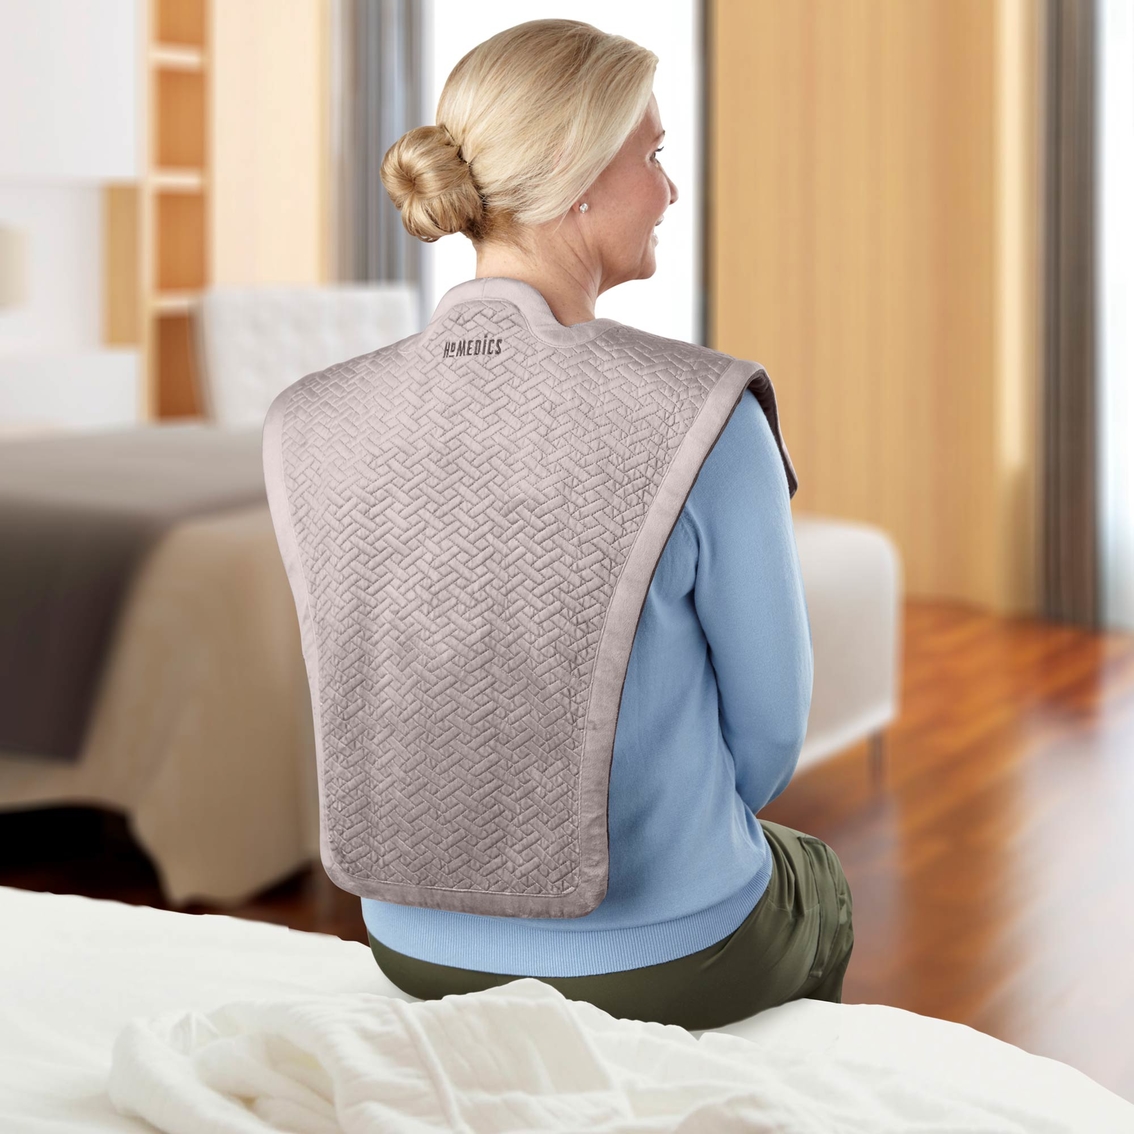 HoMedics Comfort Pro Elite Massage Vibration Wrap with Heat - Image 3 of 3